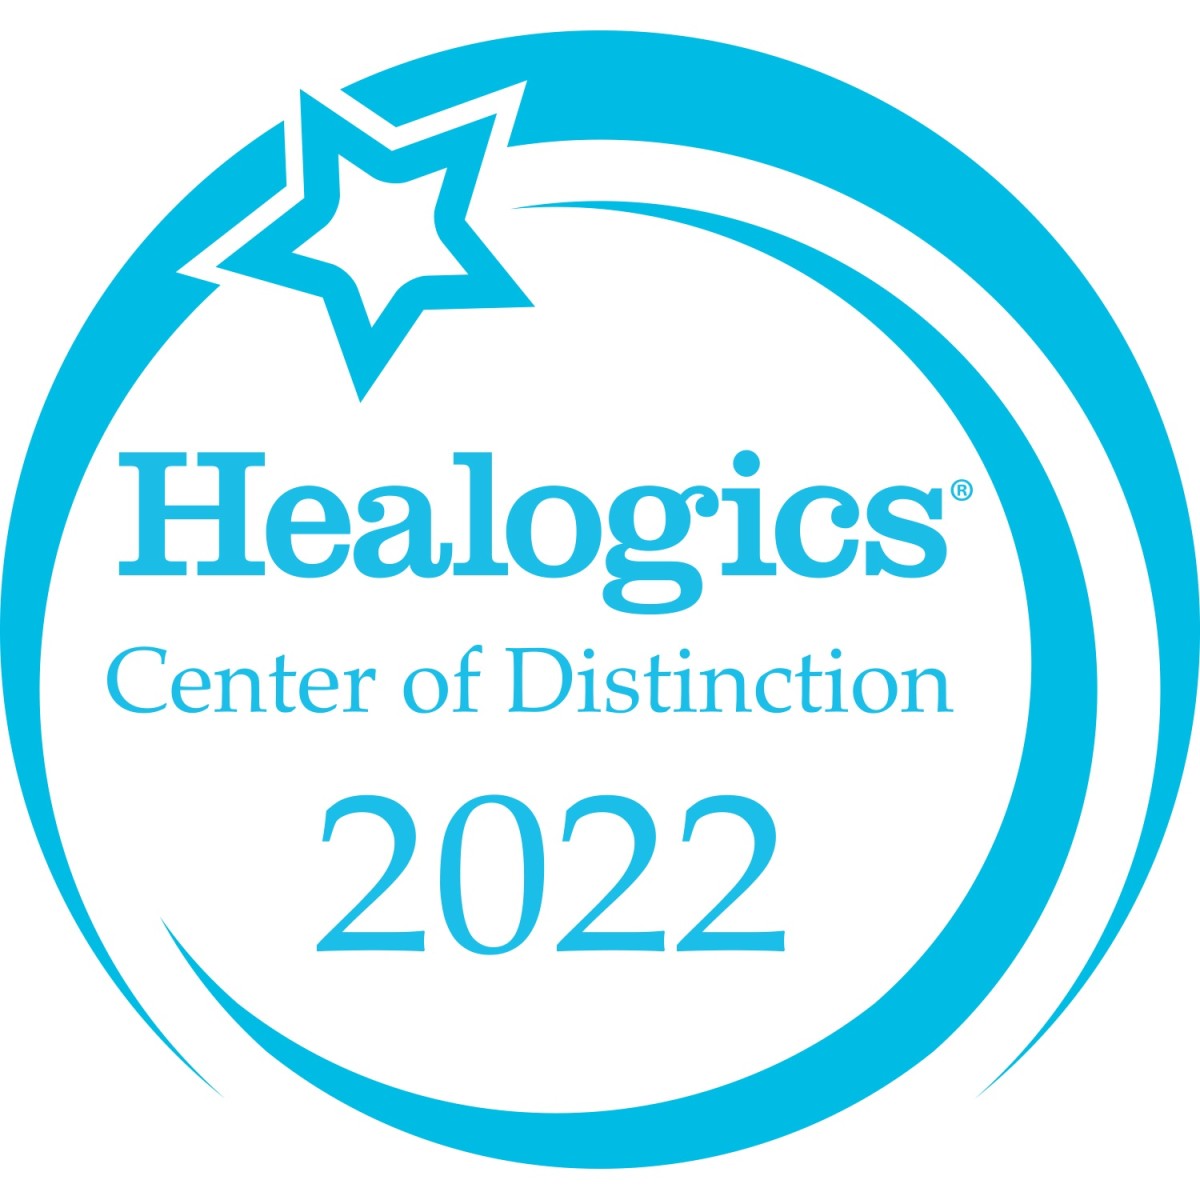 Healogics Center of Distinction 2022 badge